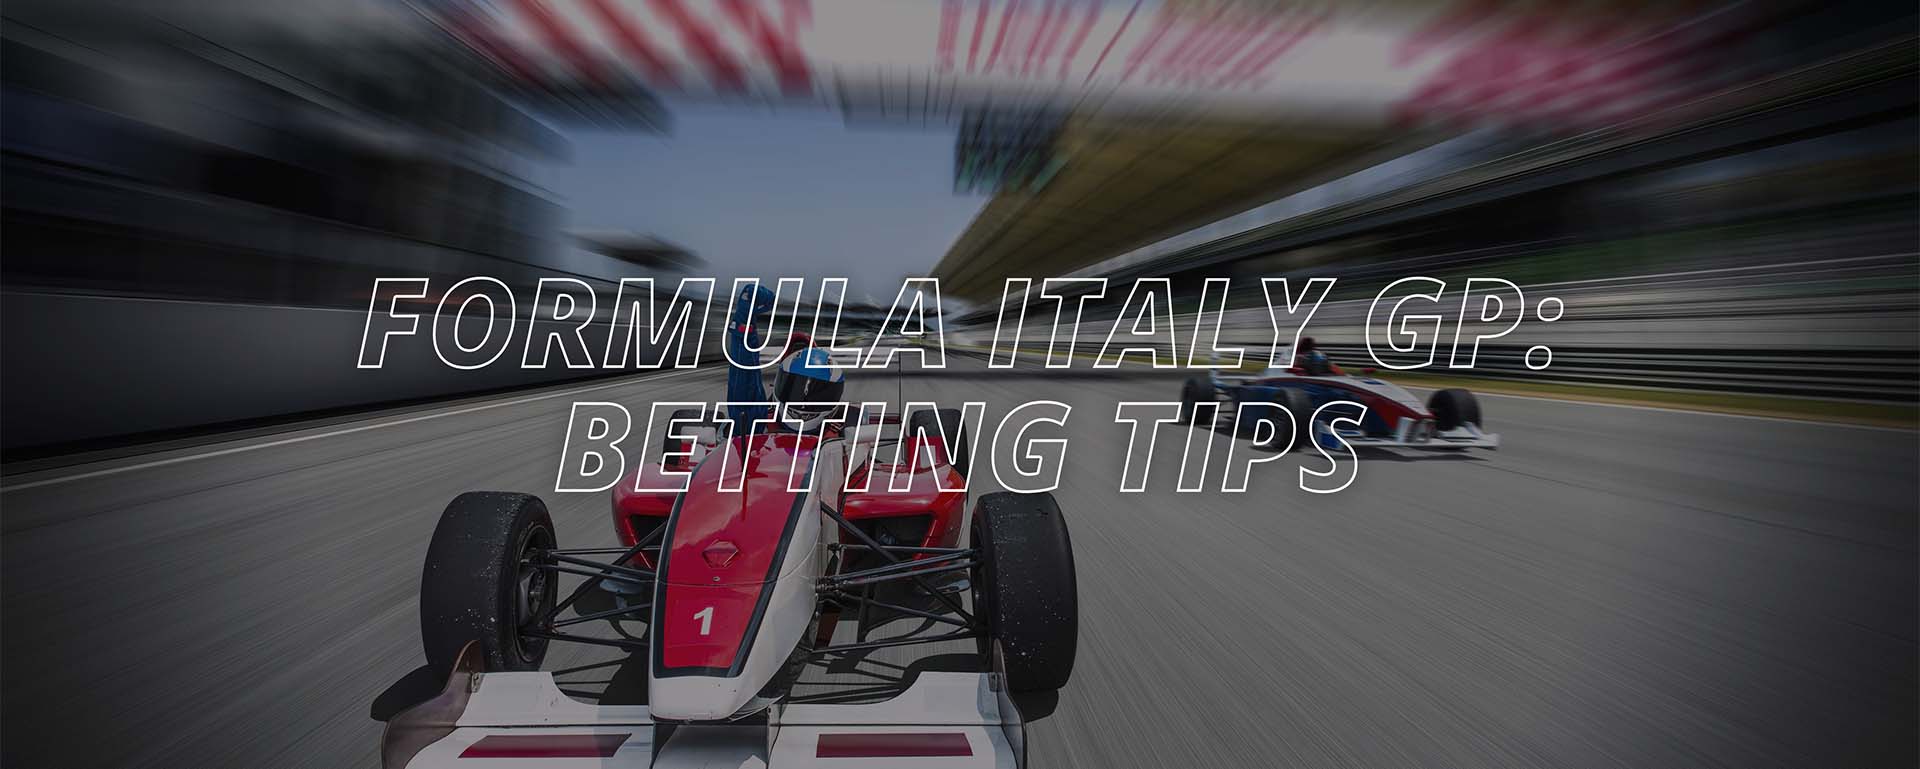 ITALIAN GP: BETTING TIPS